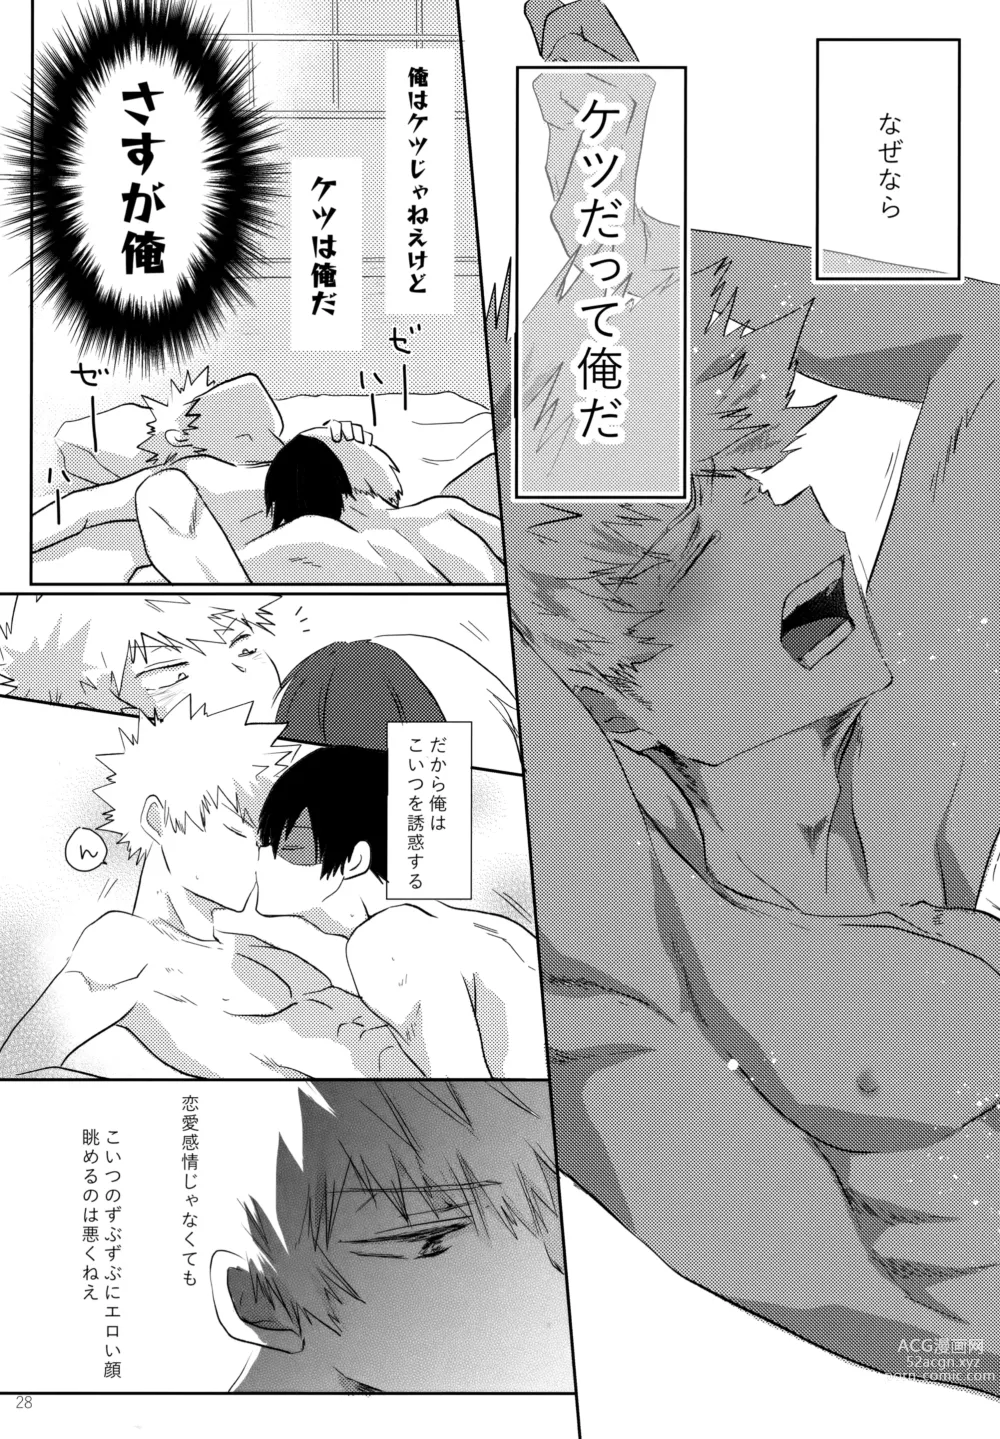 Page 28 of doujinshi Re:Chilled TDBK 2